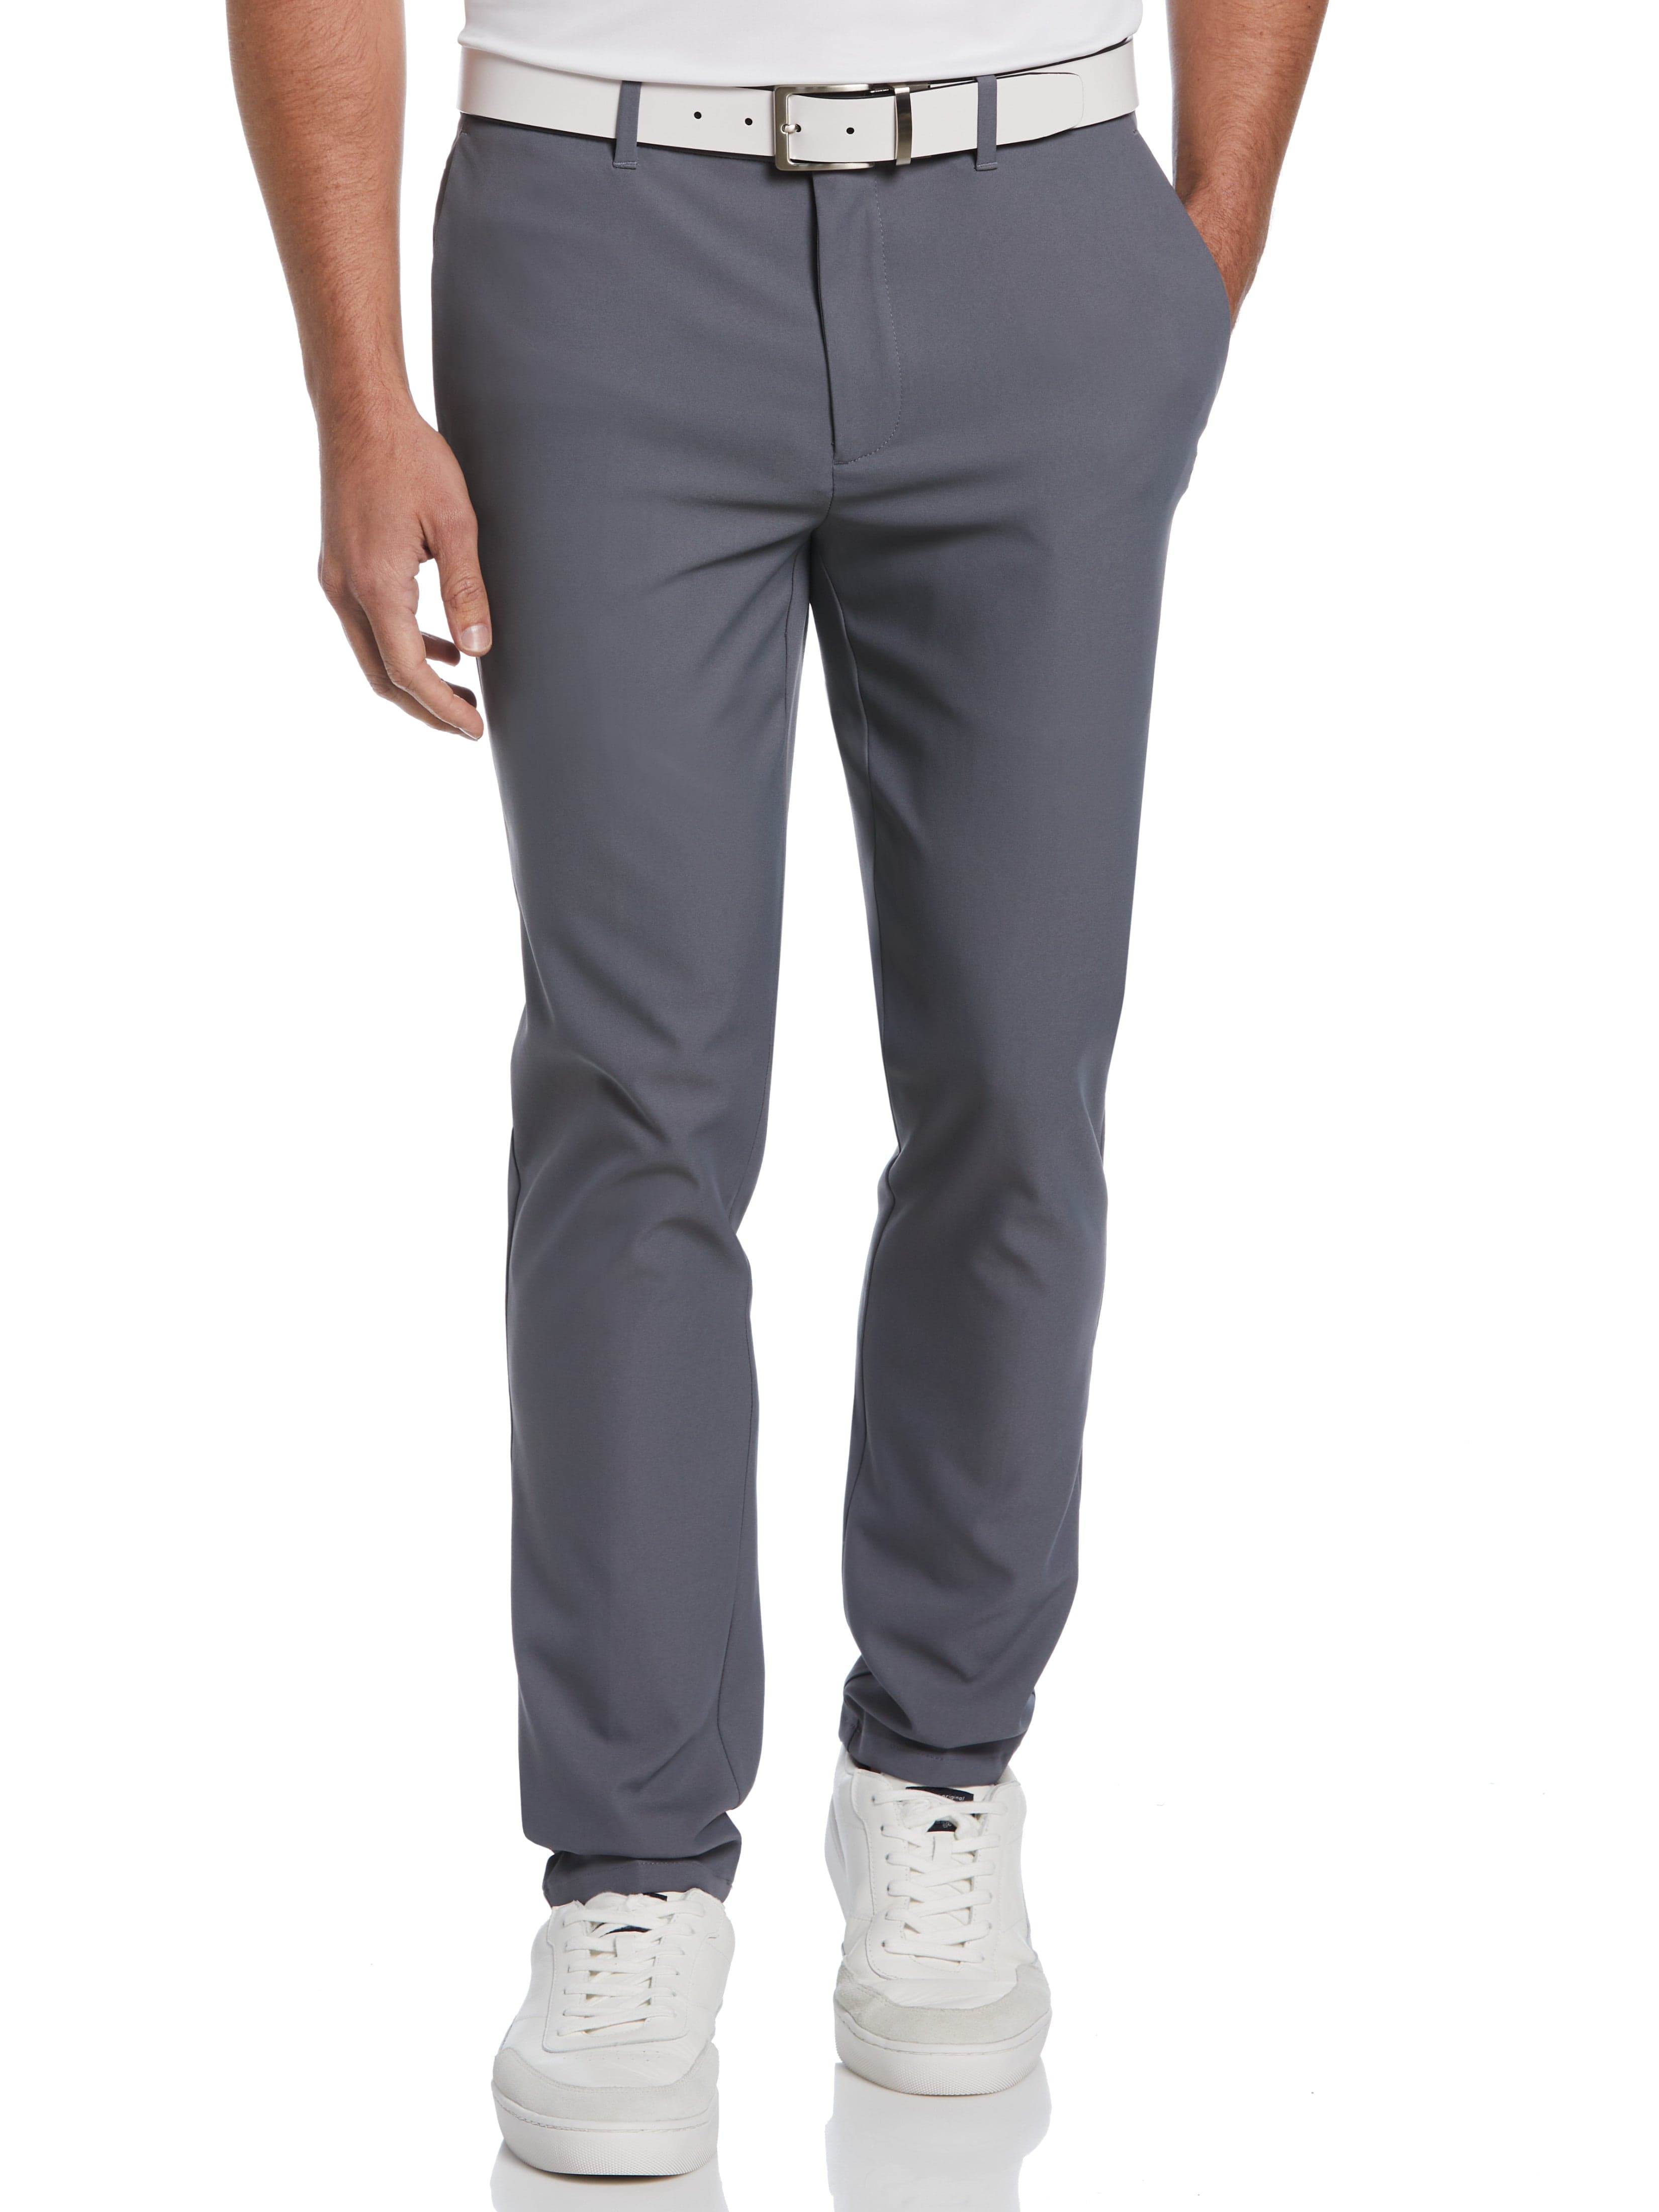 Original Penguin Mens Flat Front Solid Golf Pants, Size 30 x 32, Quiet Shade Gray, 100% Polyester | Golf Apparel Shop